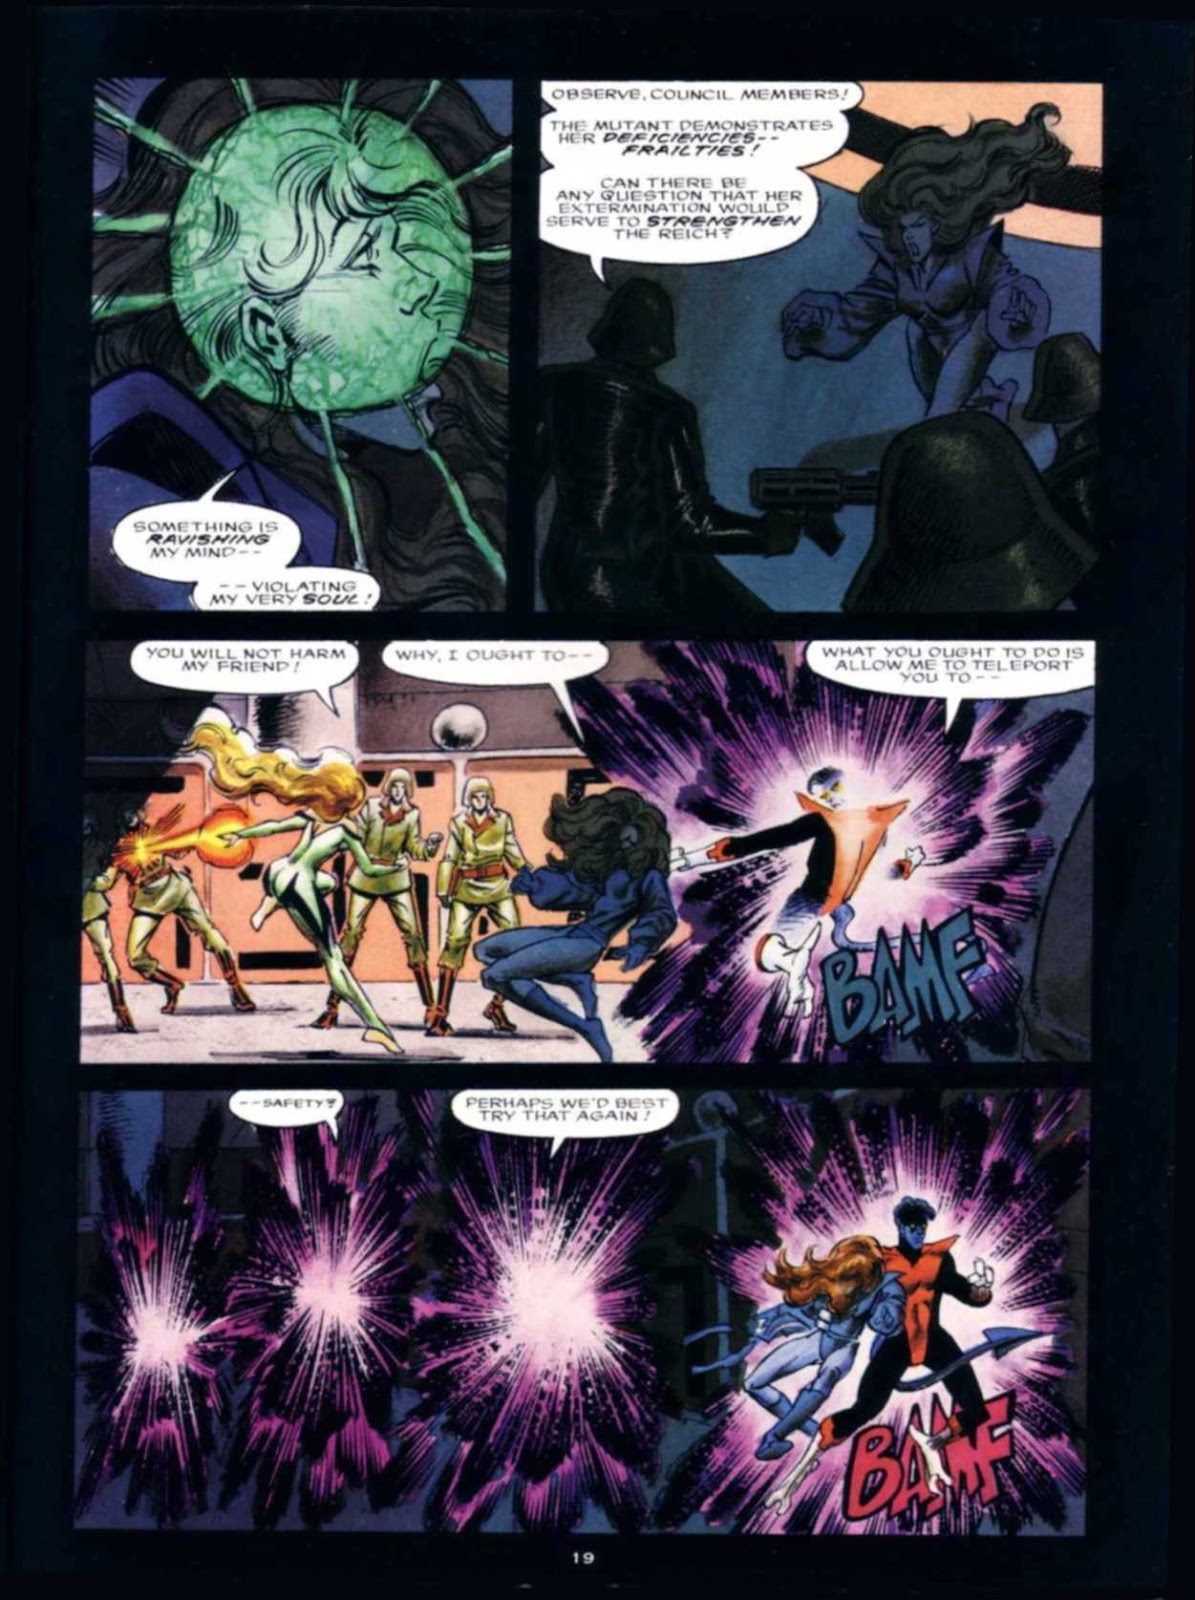 Marvel Graphic Novel issue 66 - Excalibur - Weird War III - Page 19